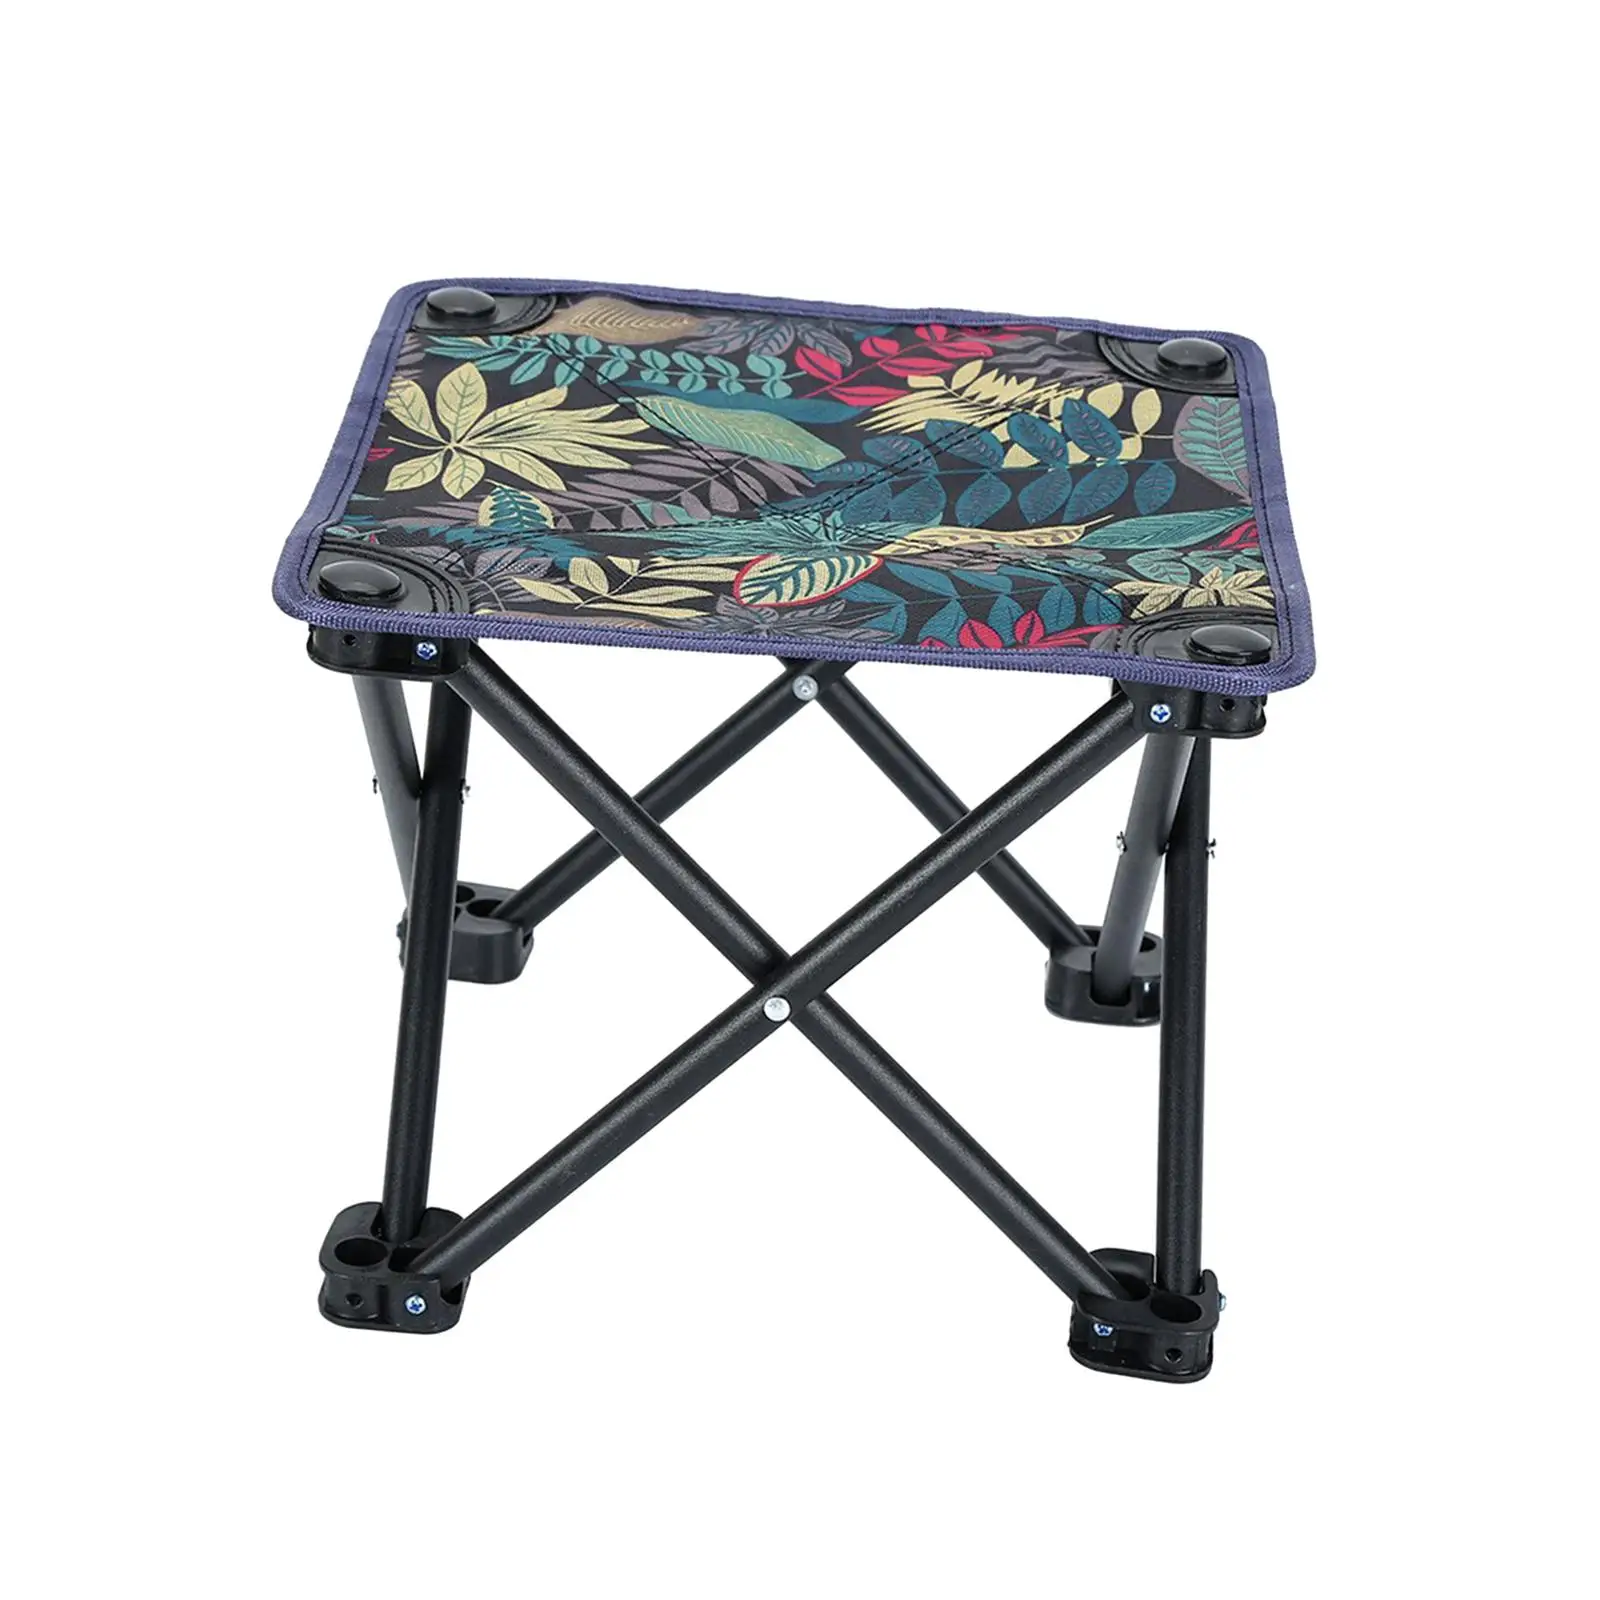 Folding Stool Practical Reusable Portable Wear Resistant Anti Slip Camping Stool Chair for Garden Picnics Fishing Backyard Patio